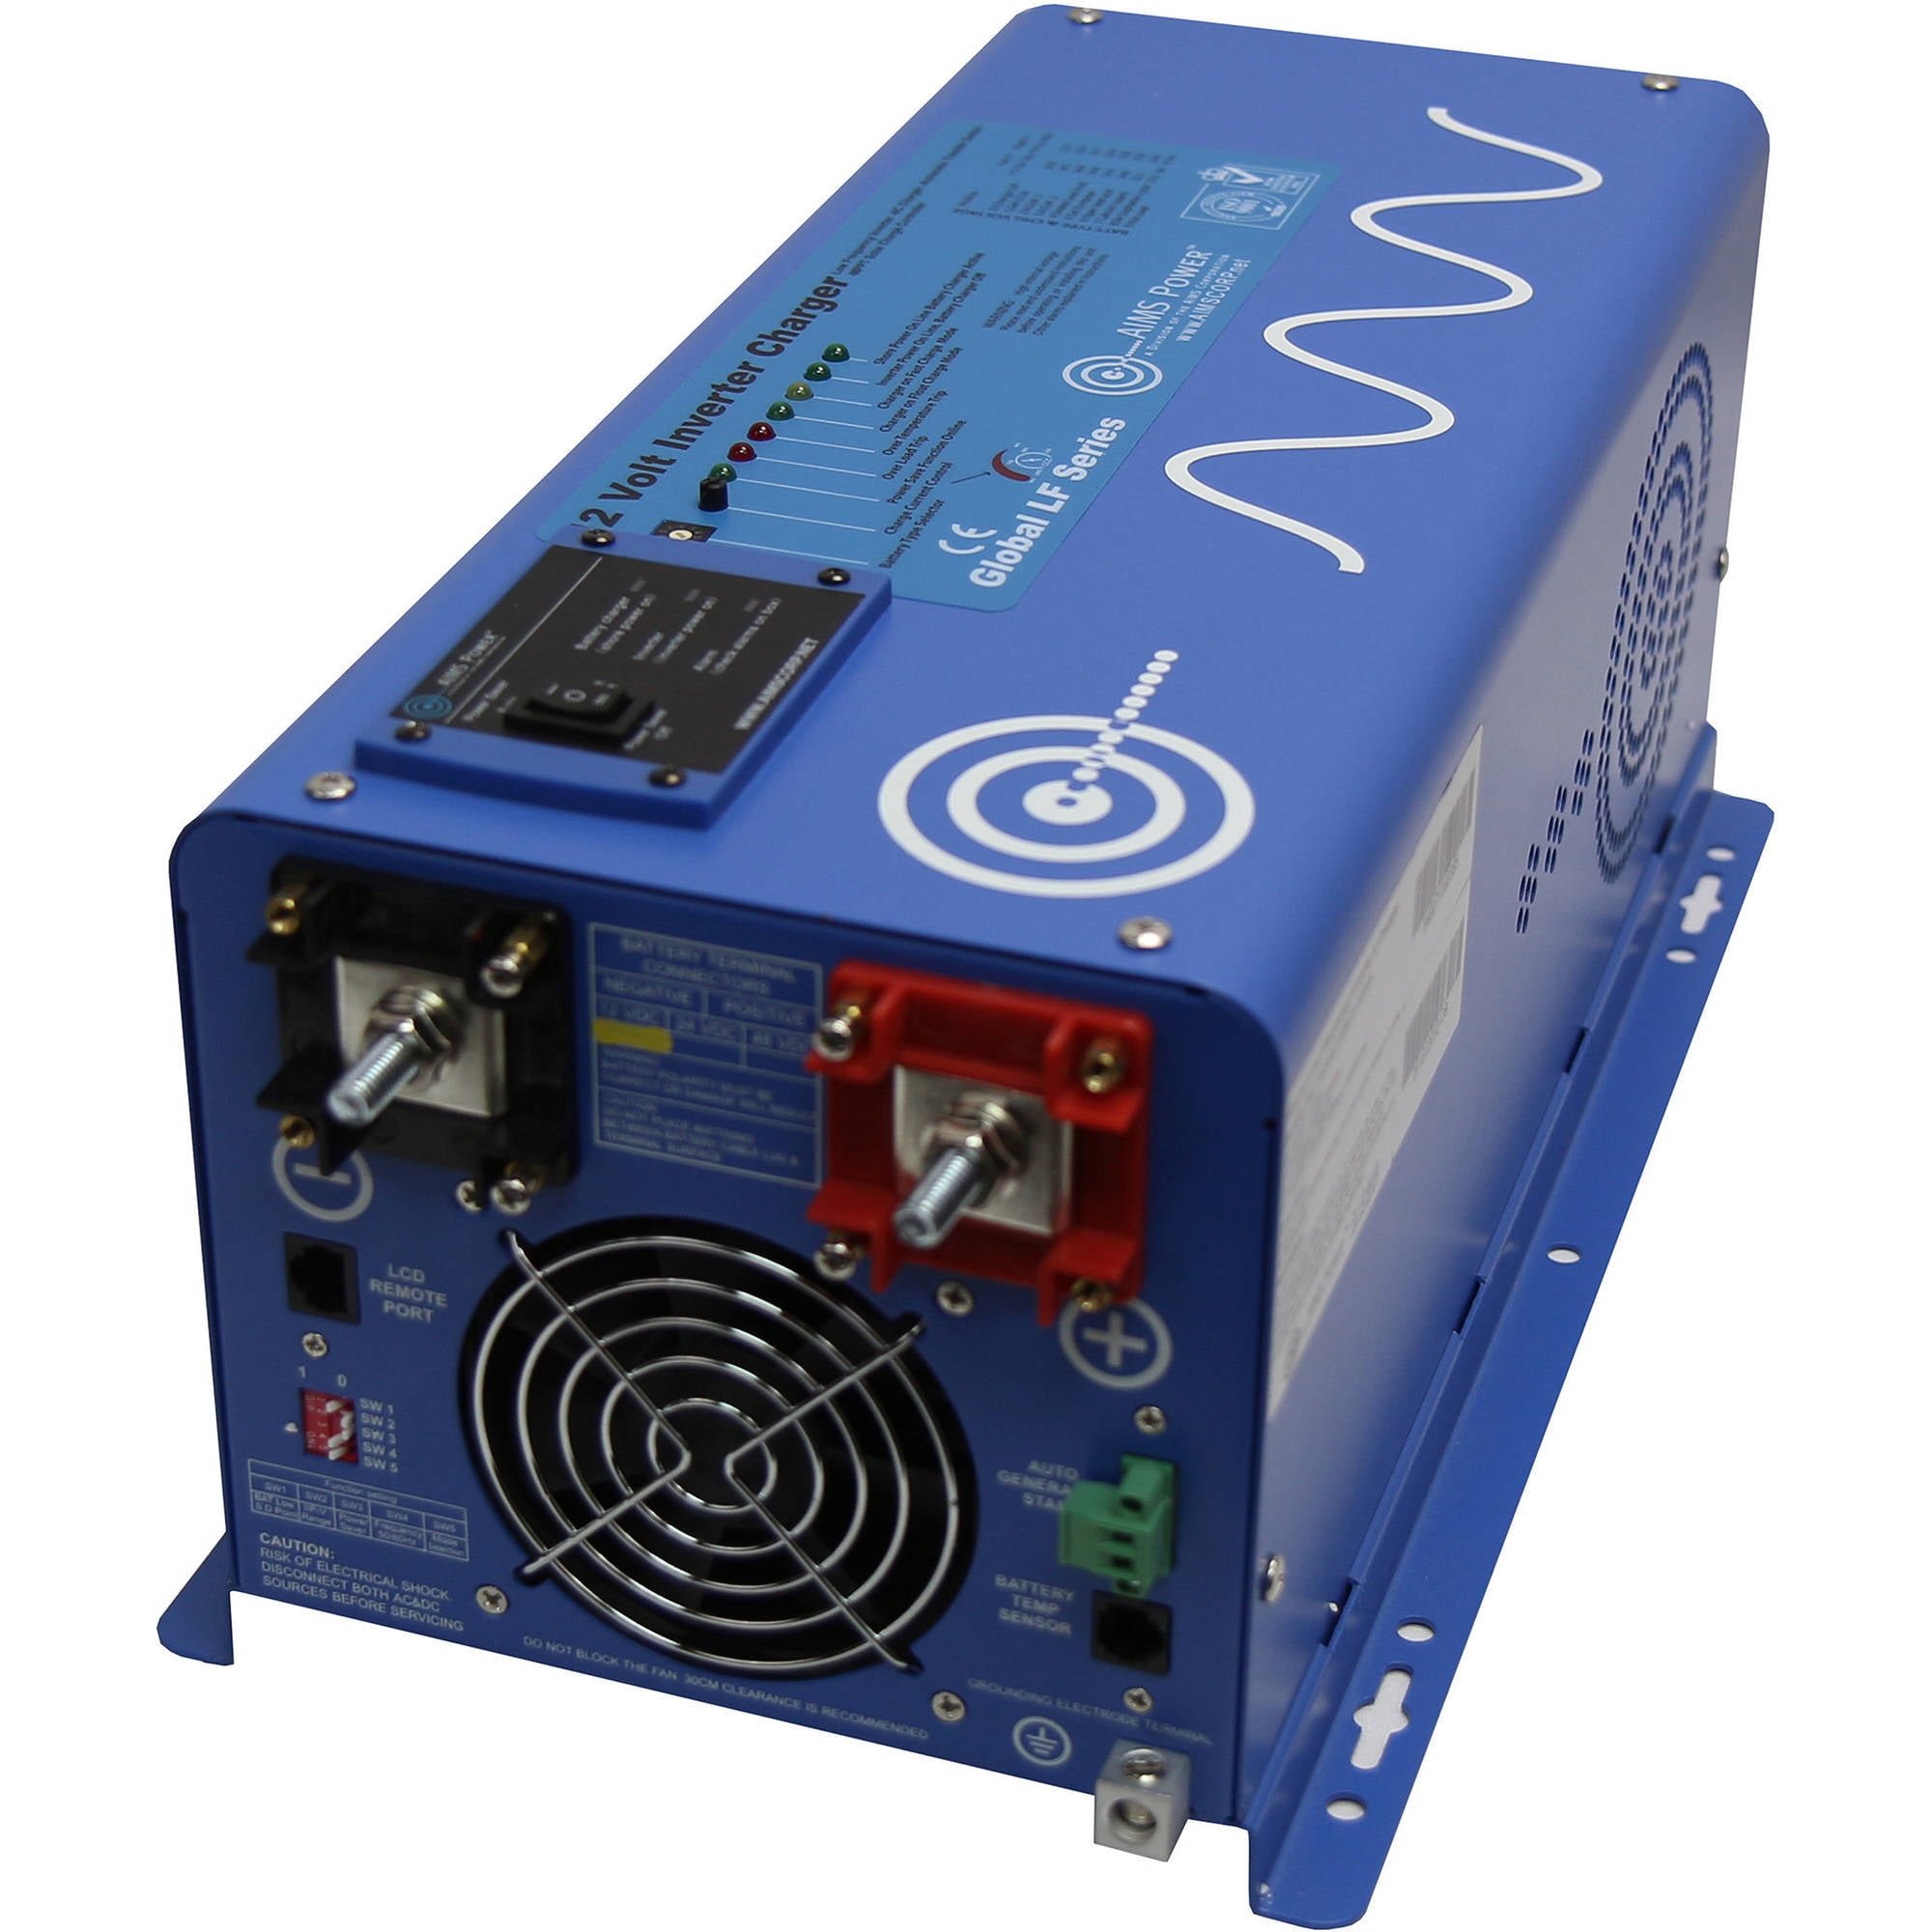 aims-power-3000w-12-volt-pure-sine-inverter-charger-walmart